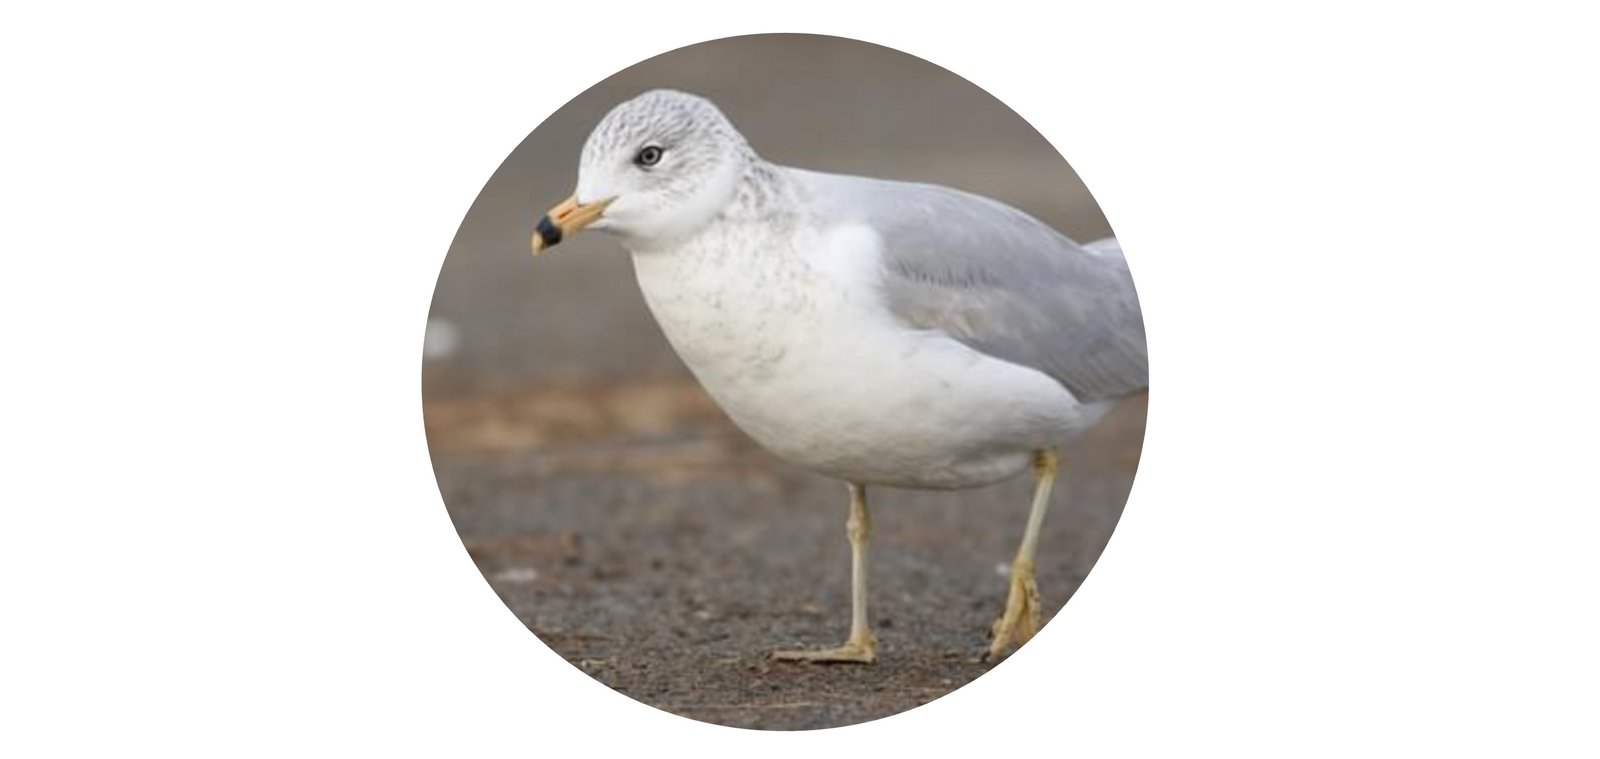 White Birds in Florida - Ring-billed Gull